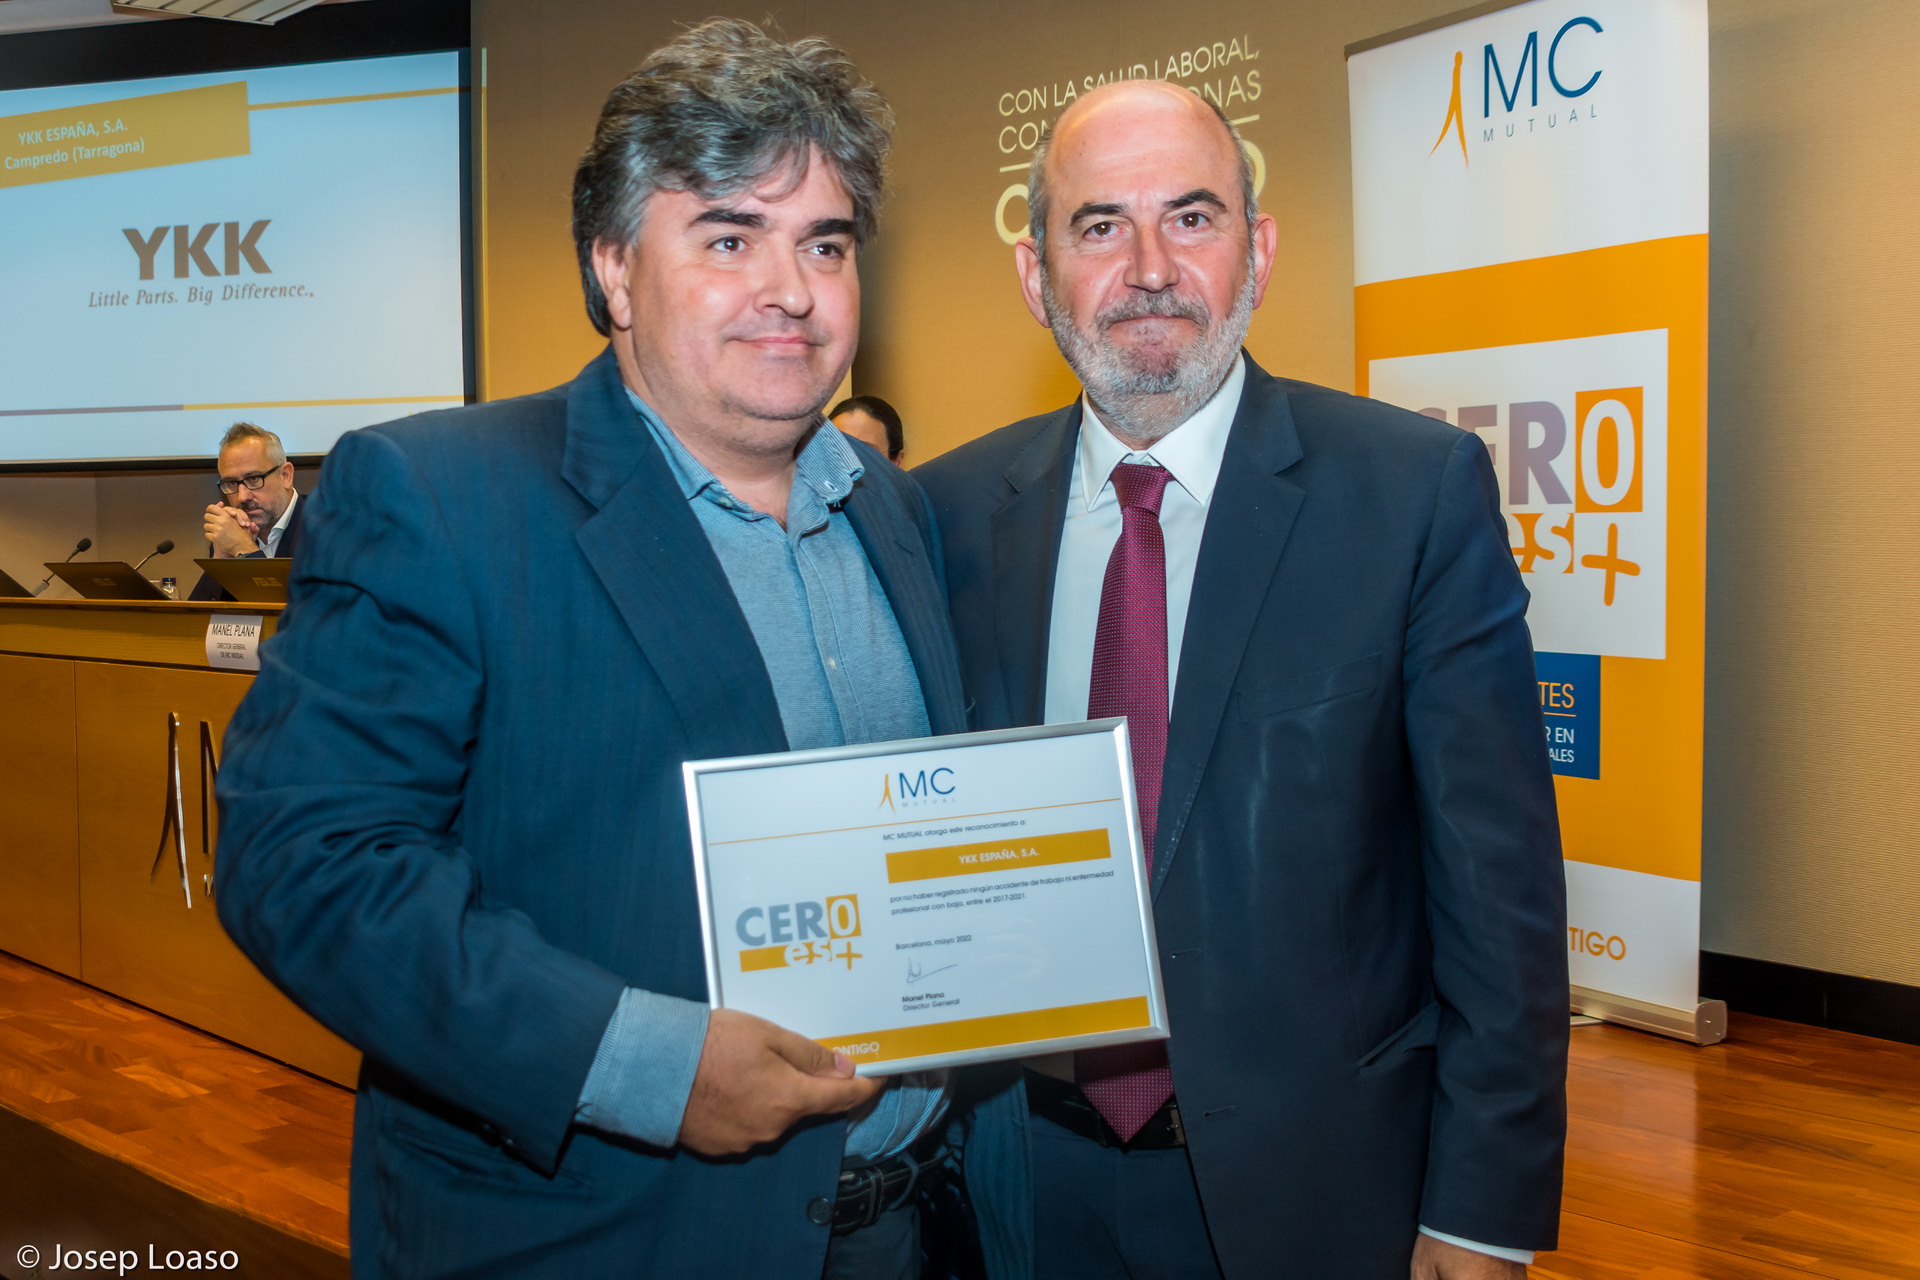 YKK España has received the distinction “Cero es +” from MC MUTUA